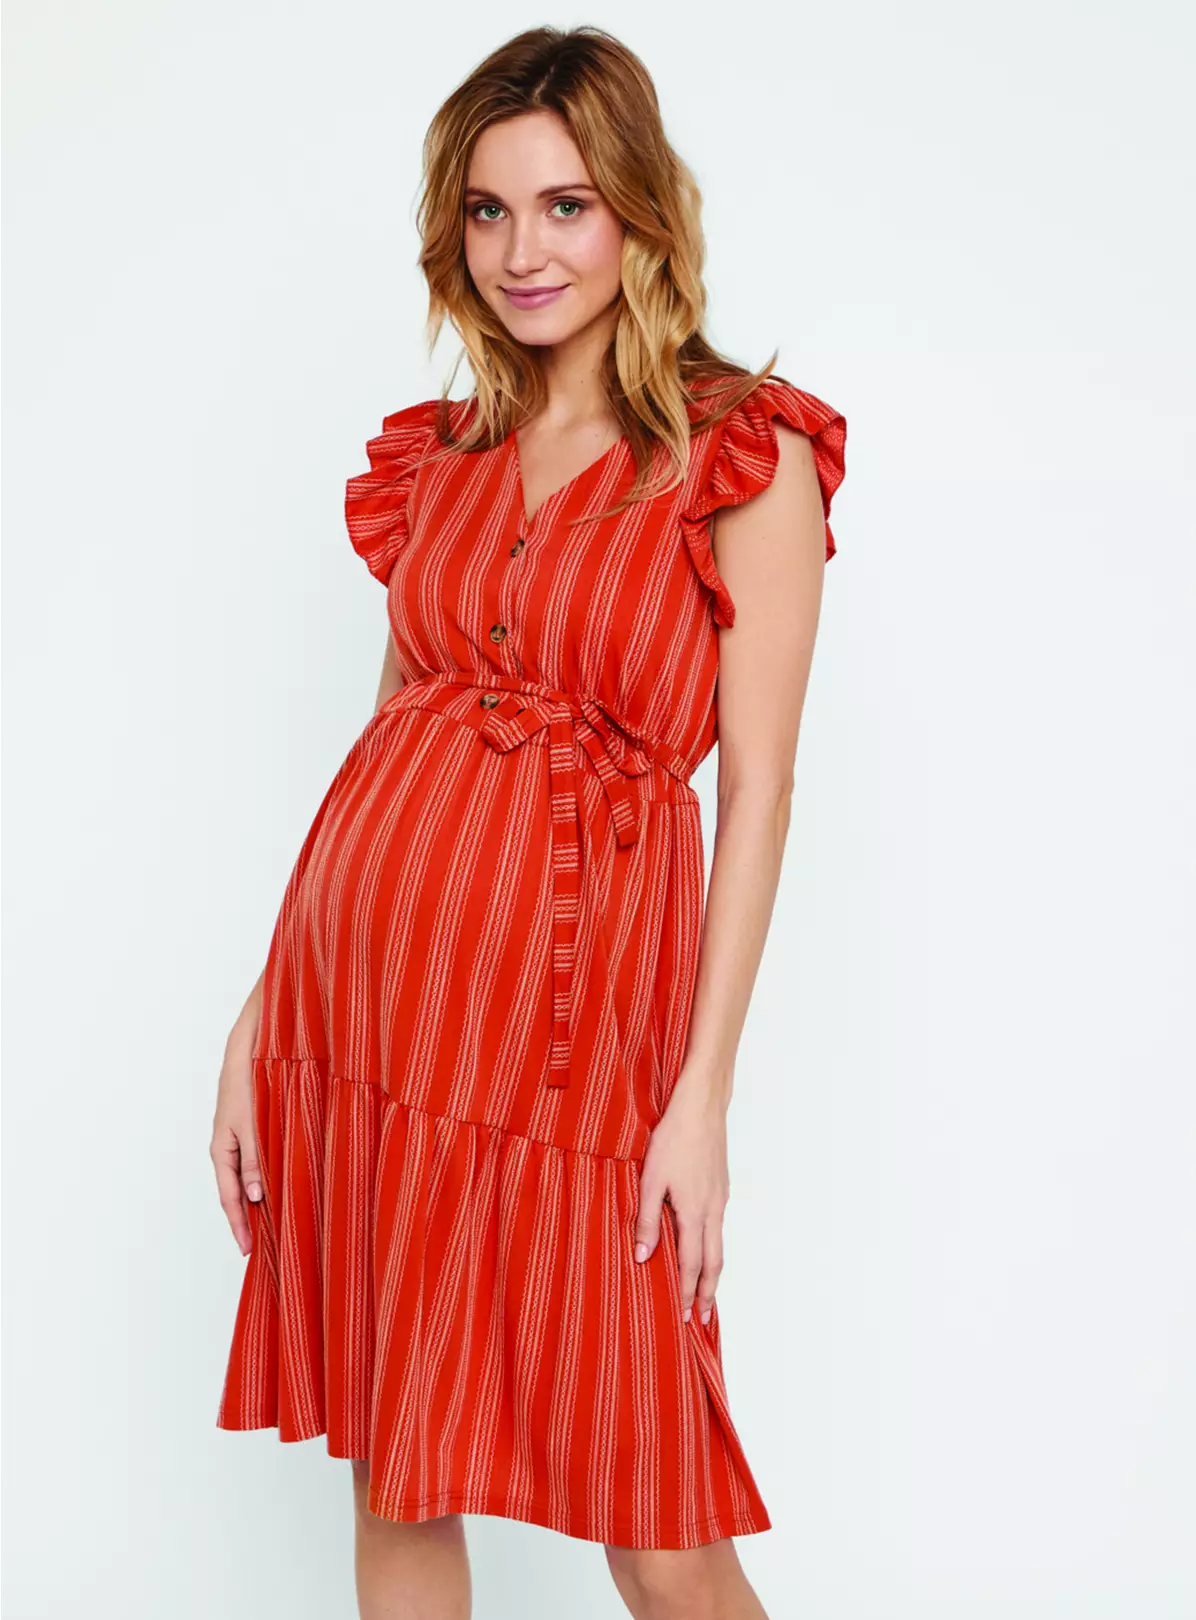 Red Stripe Maternity Dress – 8